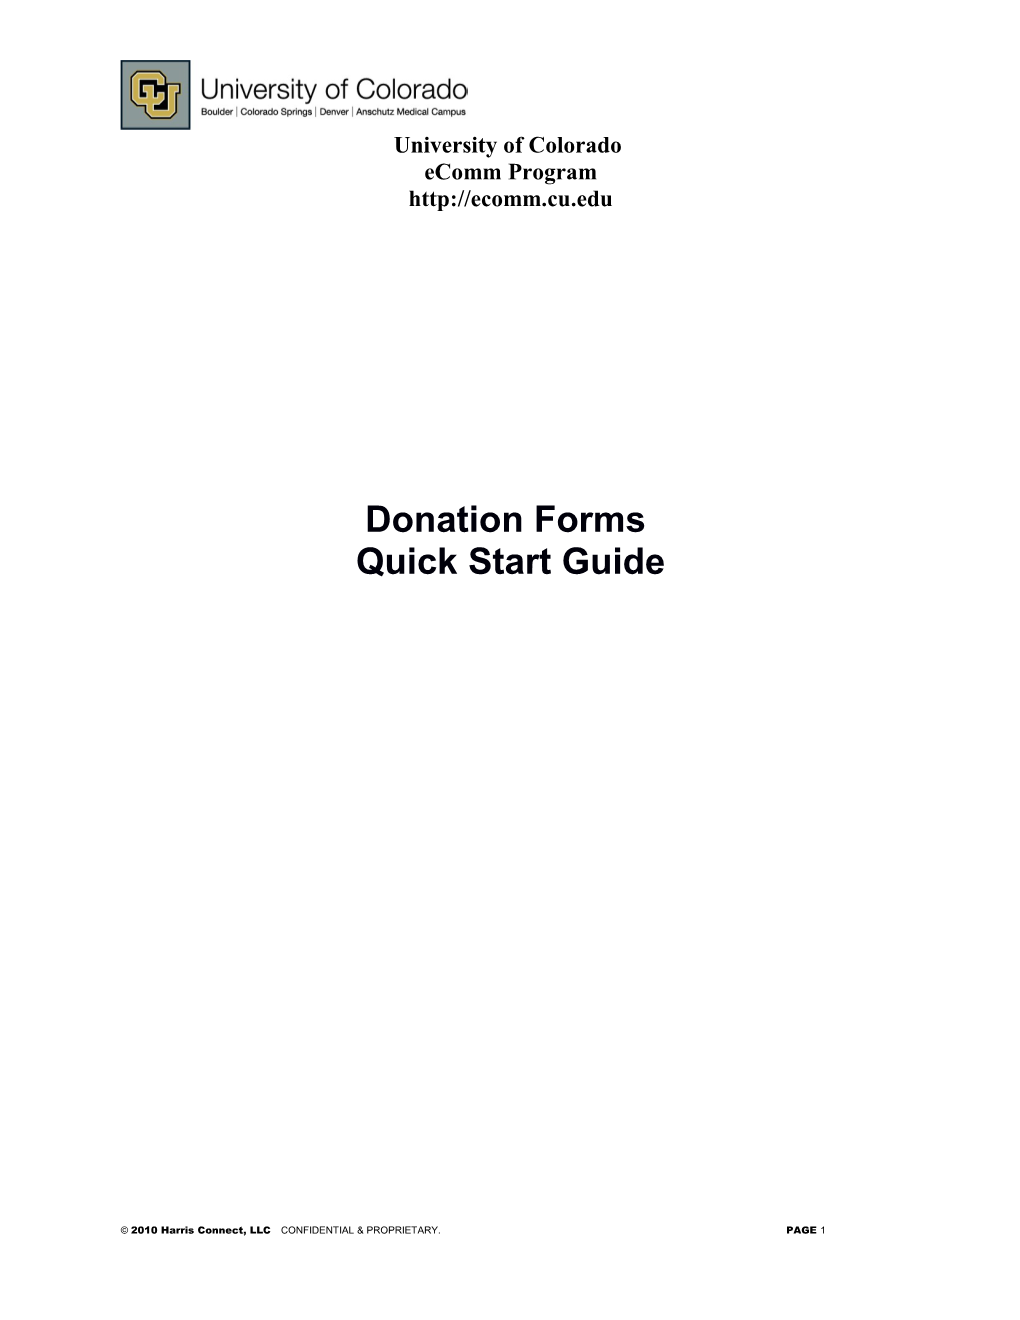 Donation Forms Quickstart Guide